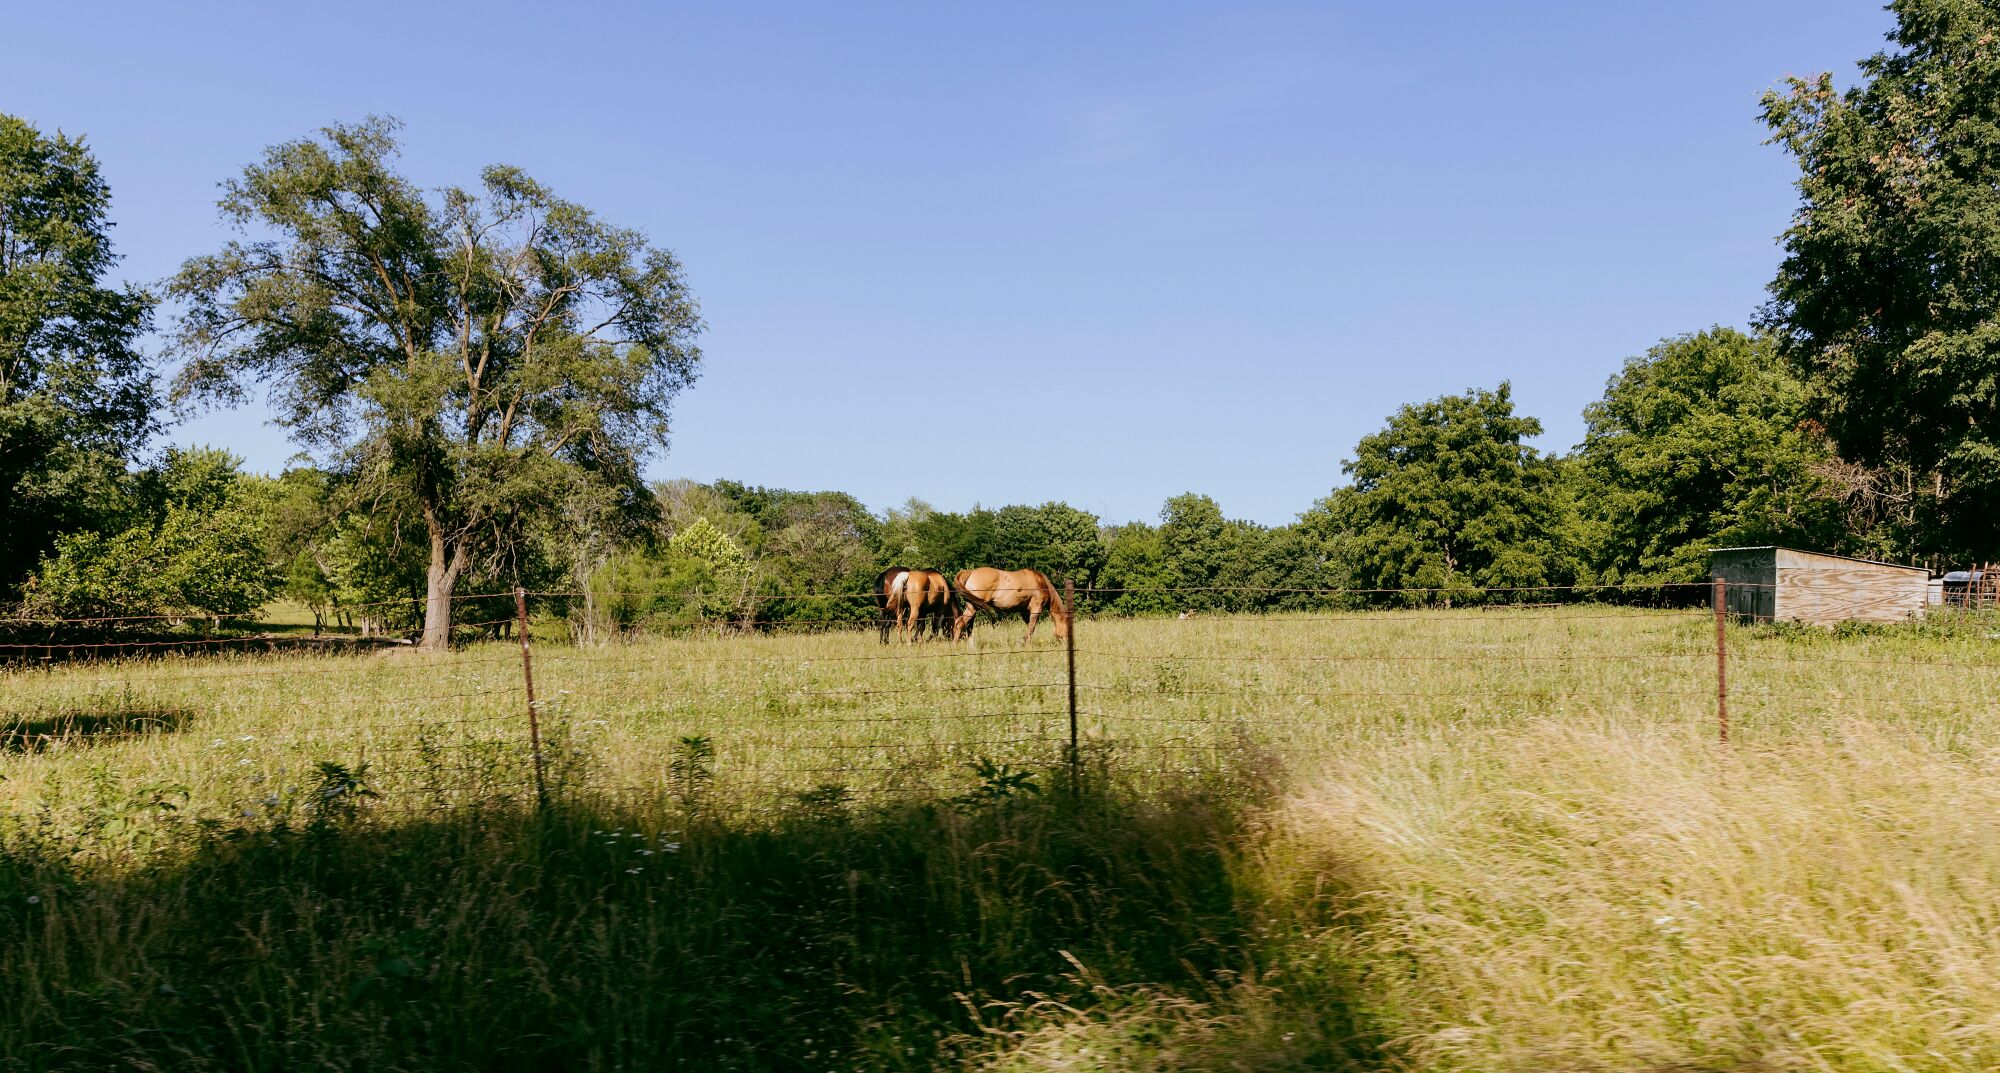 Horses graze in a field near Bunceton, a rural town in central Missouri.